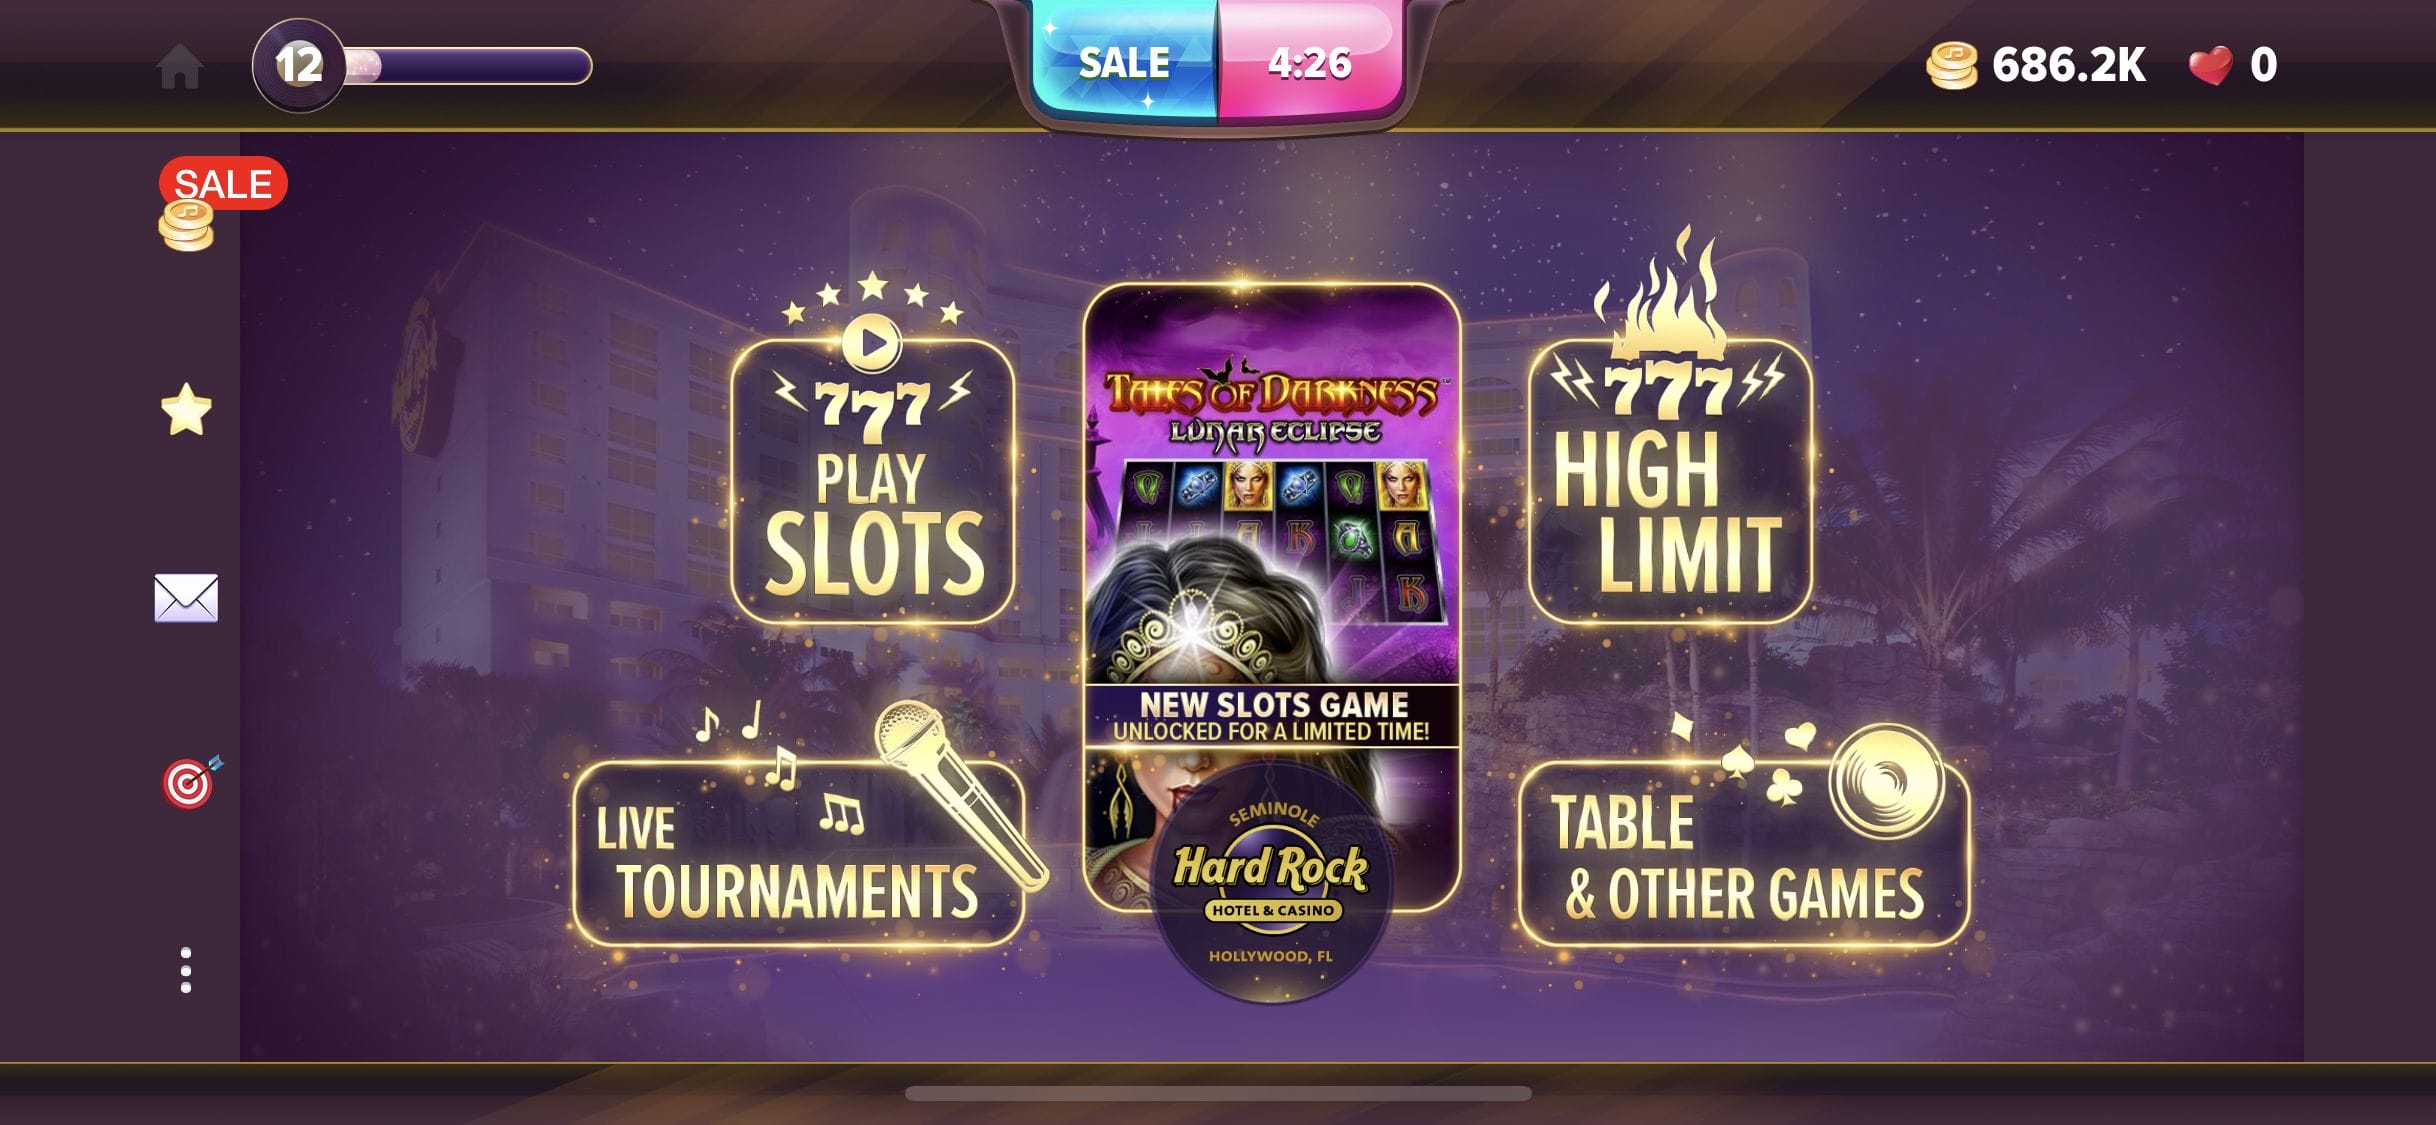 hard rock social casino loyalty points